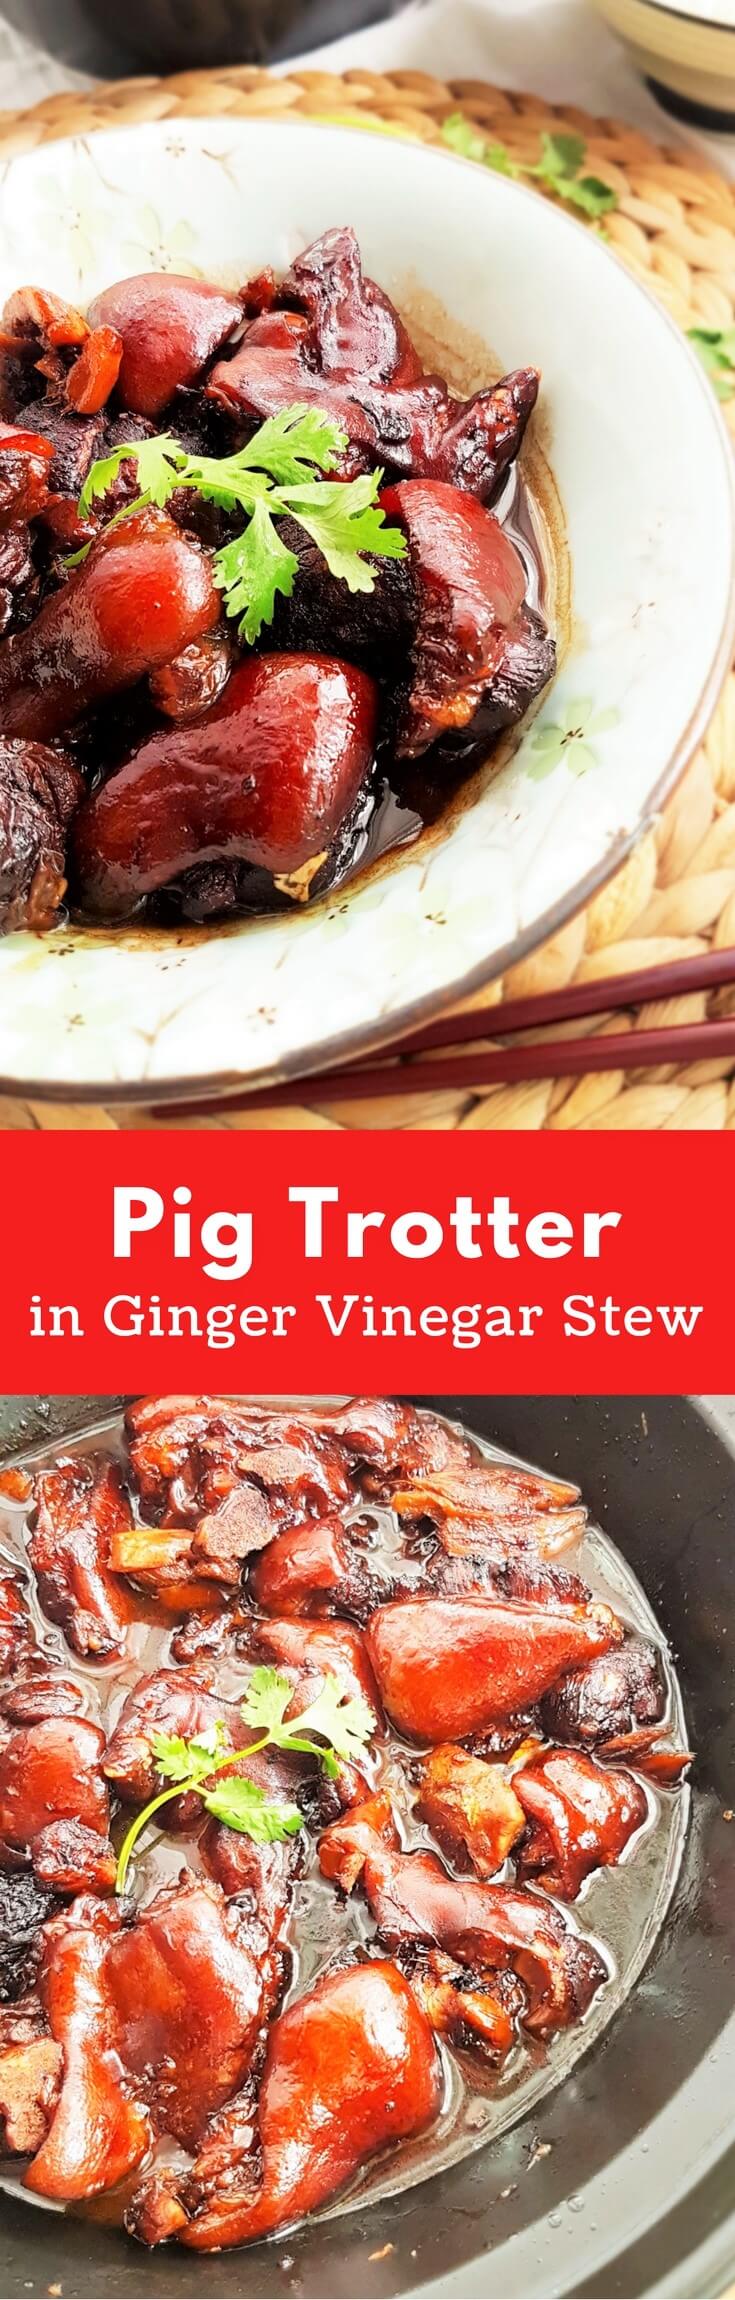 pig-trotter-in-ginger-vinegar-stew